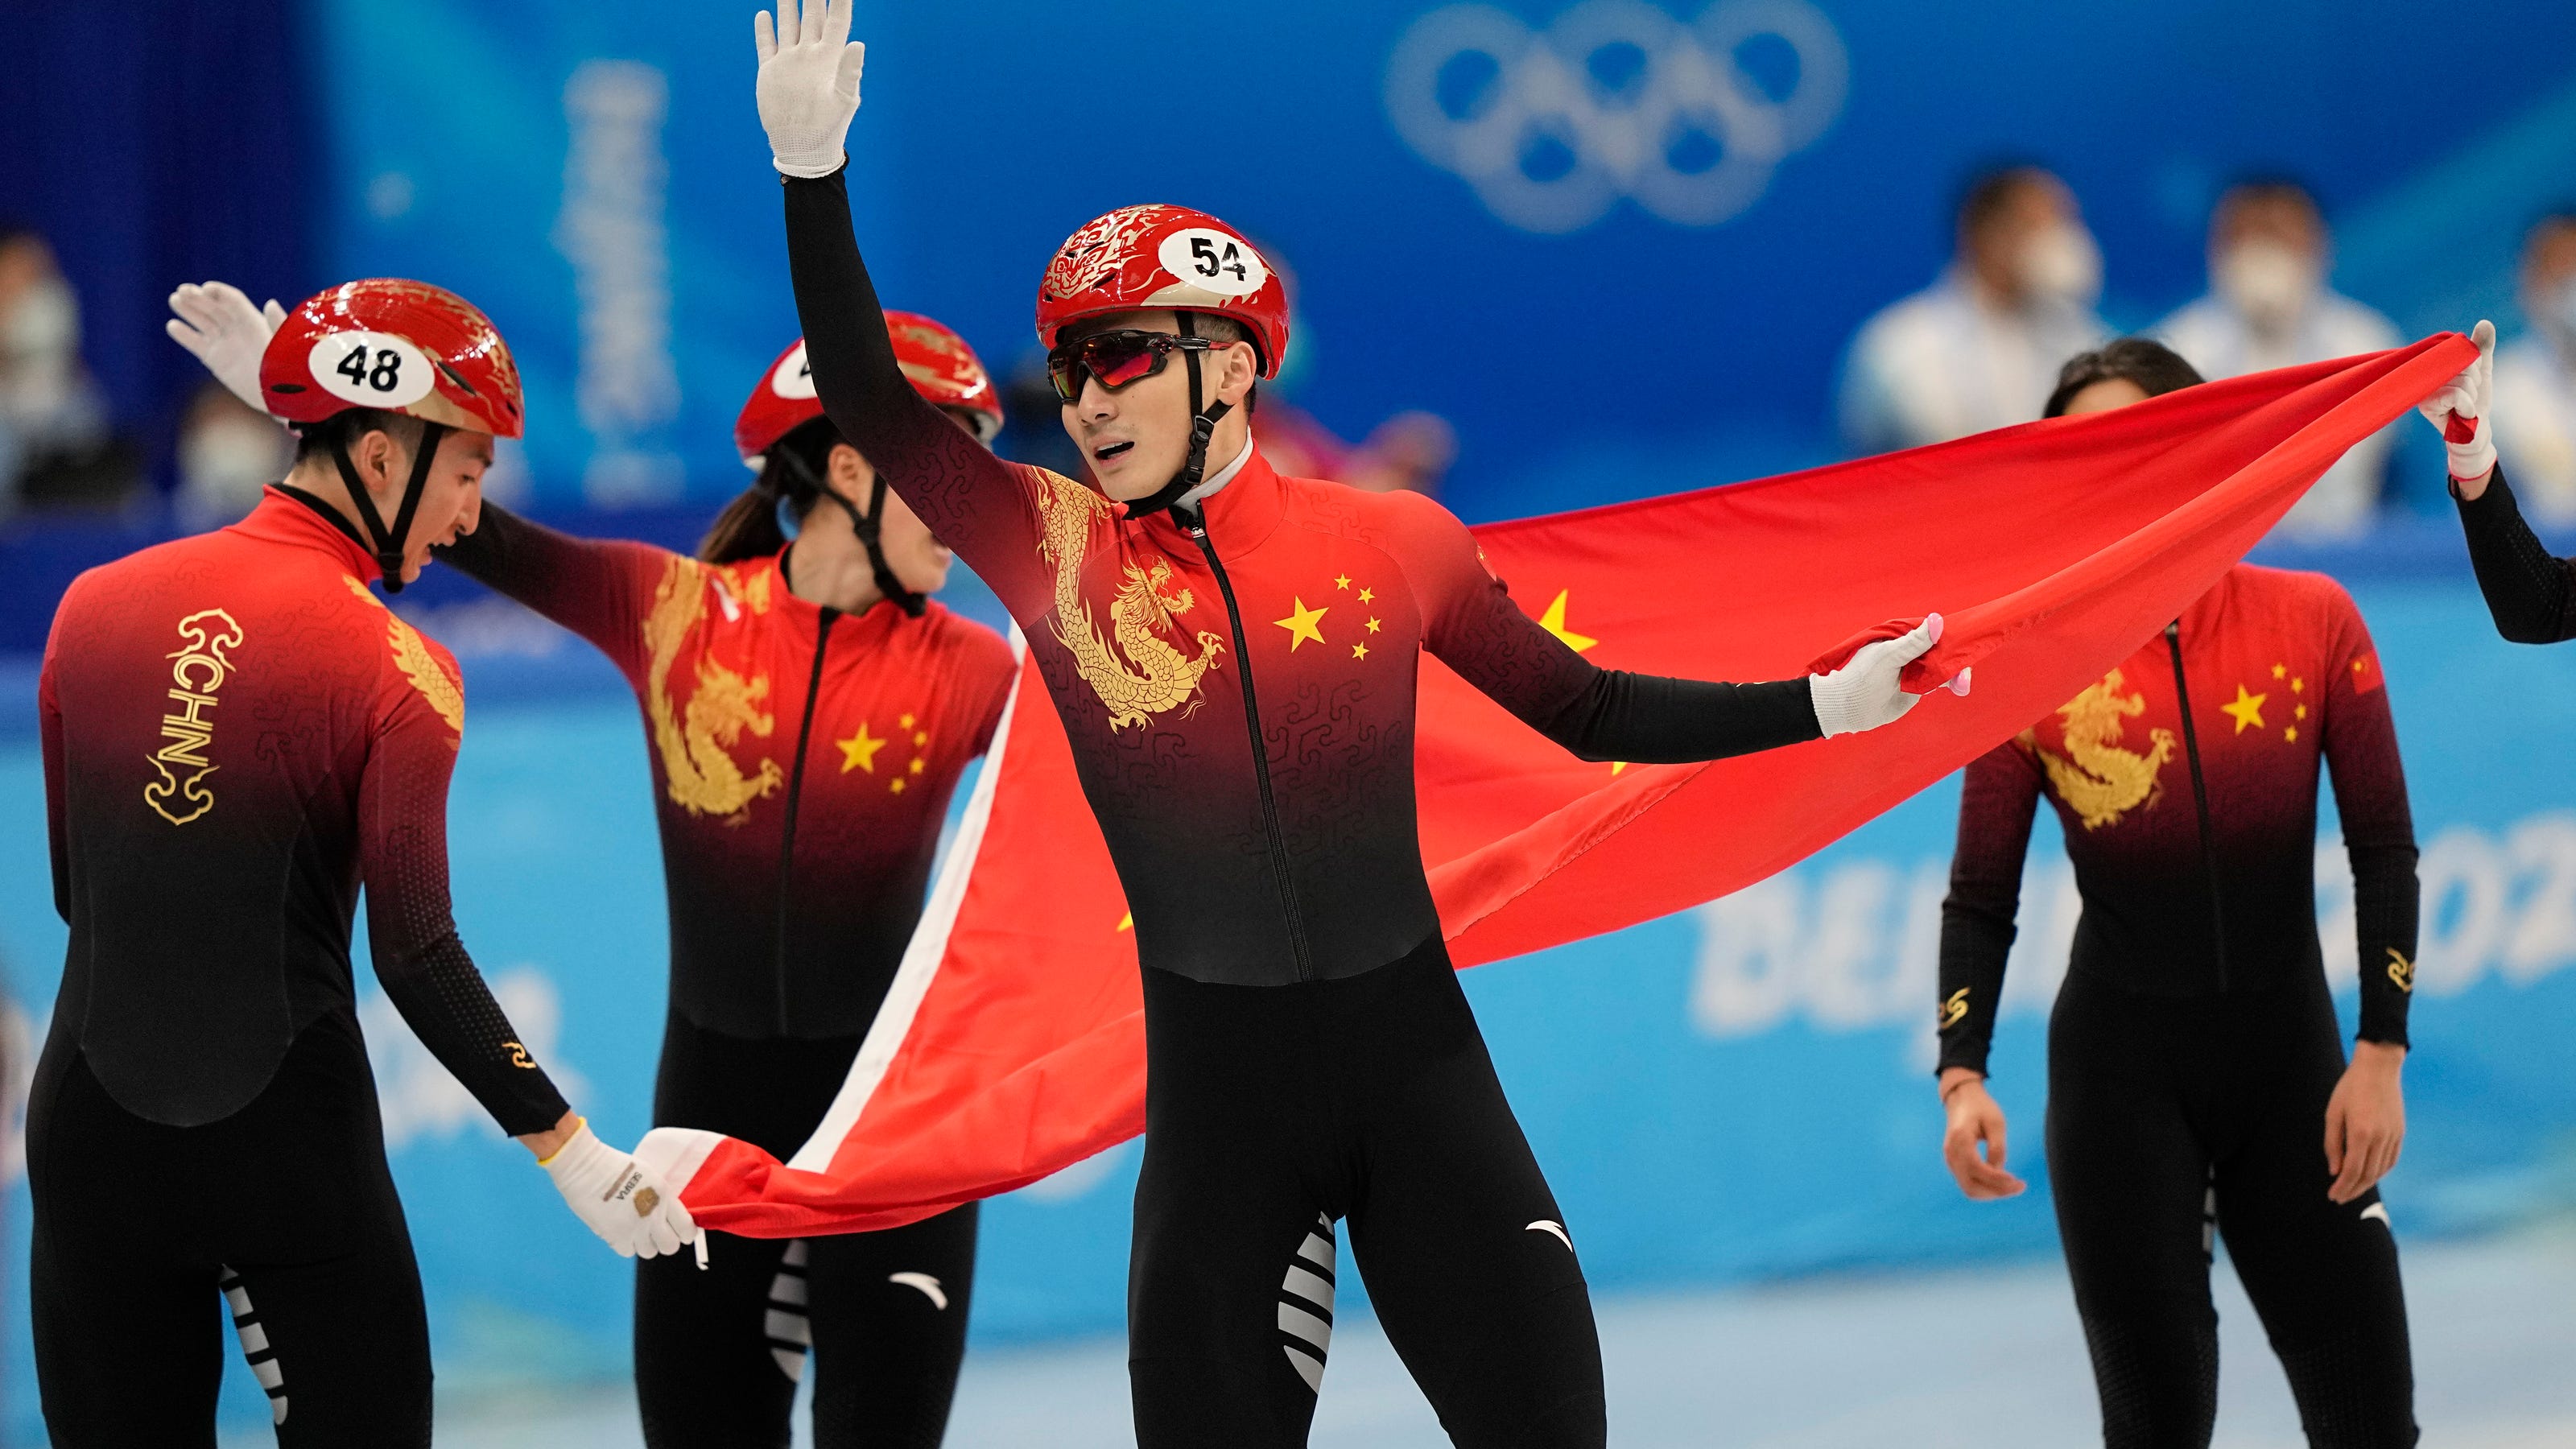 Выиграли золото олимпиады. Шорт трек Китай на Олимпийских играх 2022. Шорт трек Пекин. Beijing 2022 short track Speed Skating. Сборная Китая на Олимпиаде в Пекине 2022.